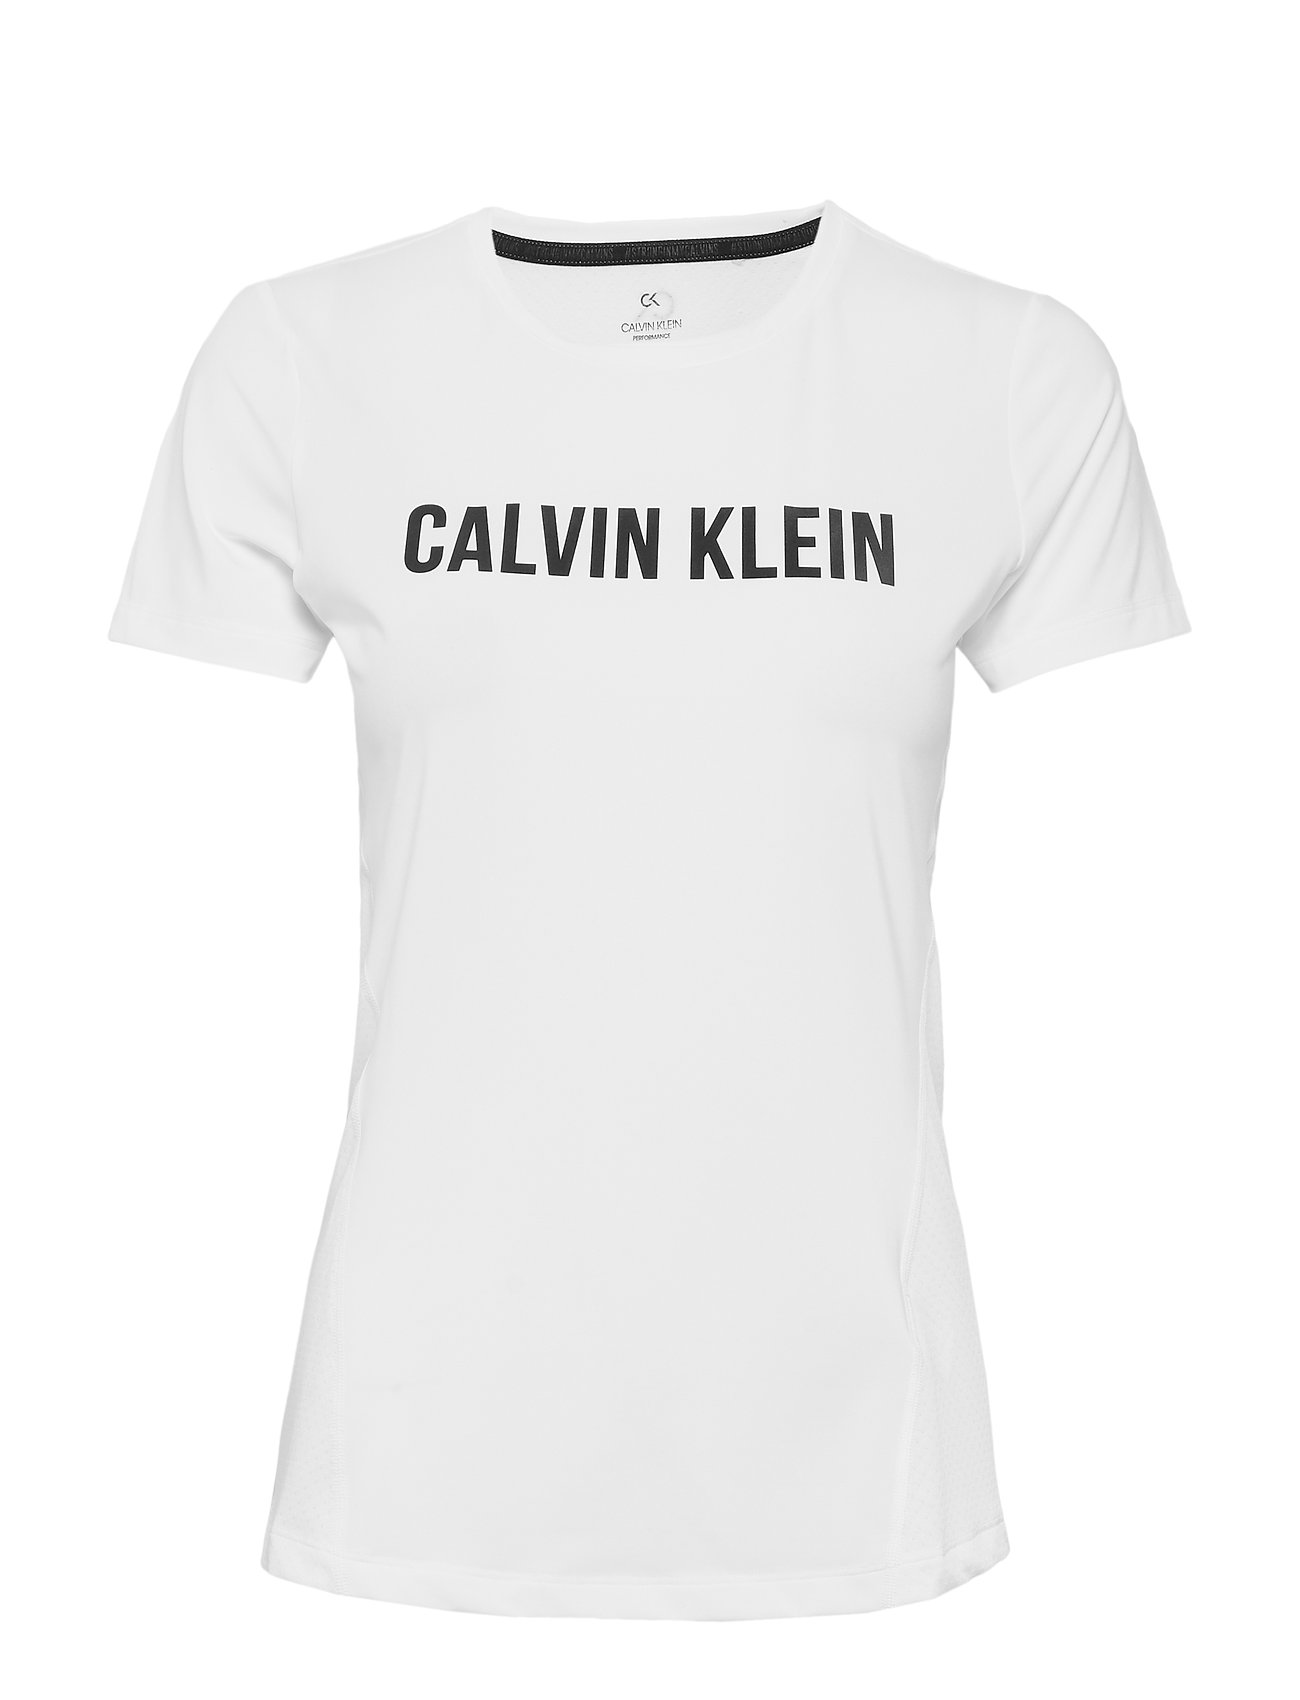 calvin klein performance shirt